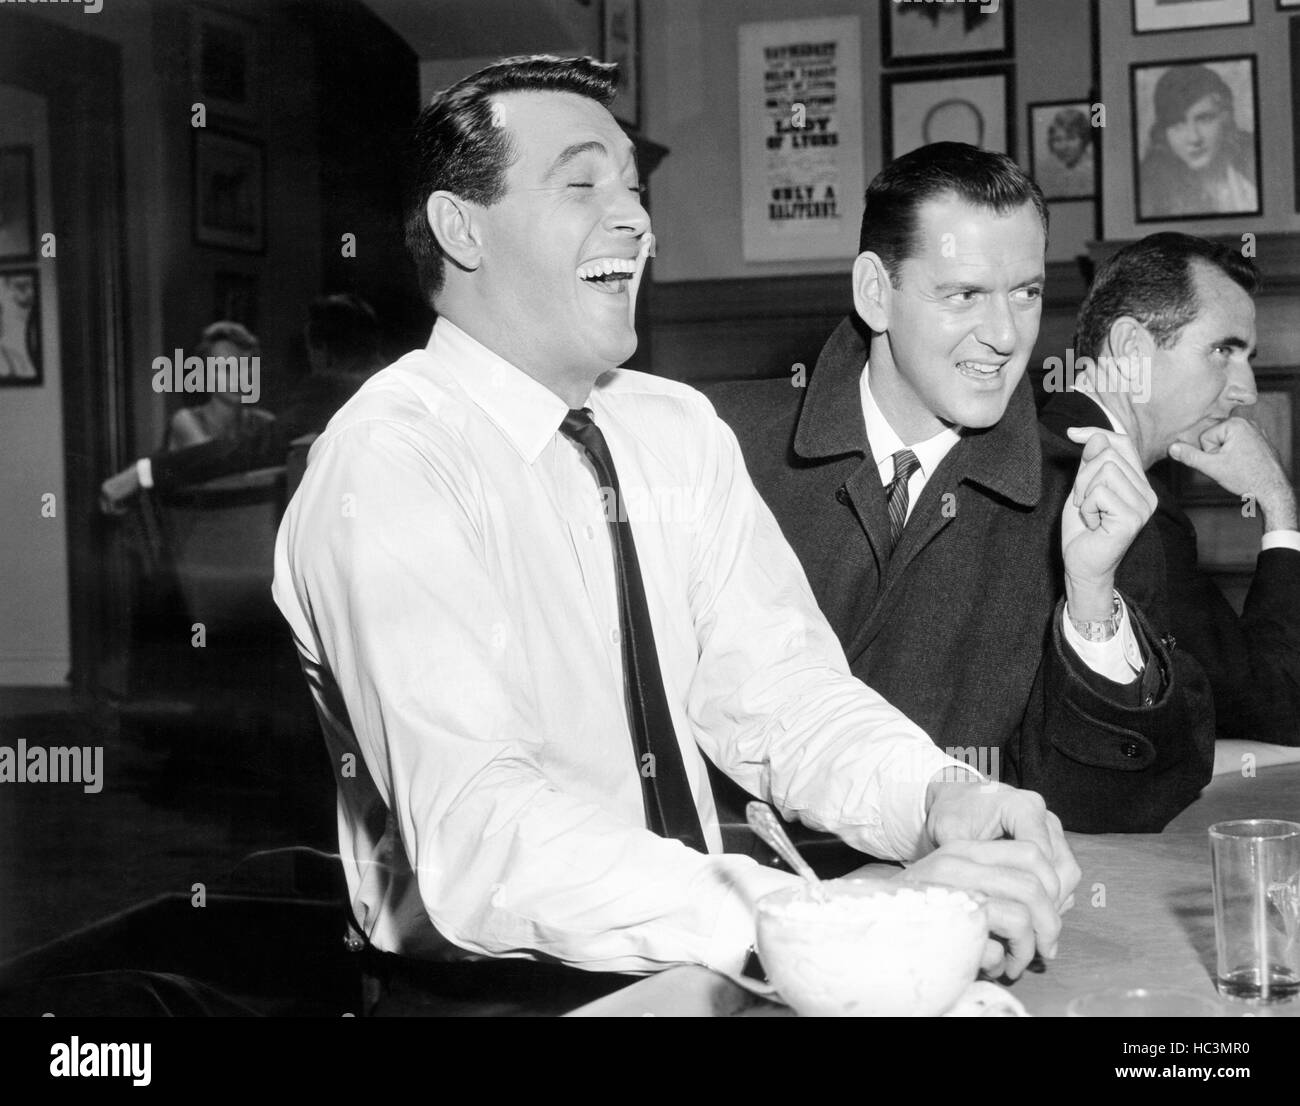 PILLOW TALK, from left: Rock Hudson, Tony Randall, having a laugh between scenes, on set, 1959 Stock Photo